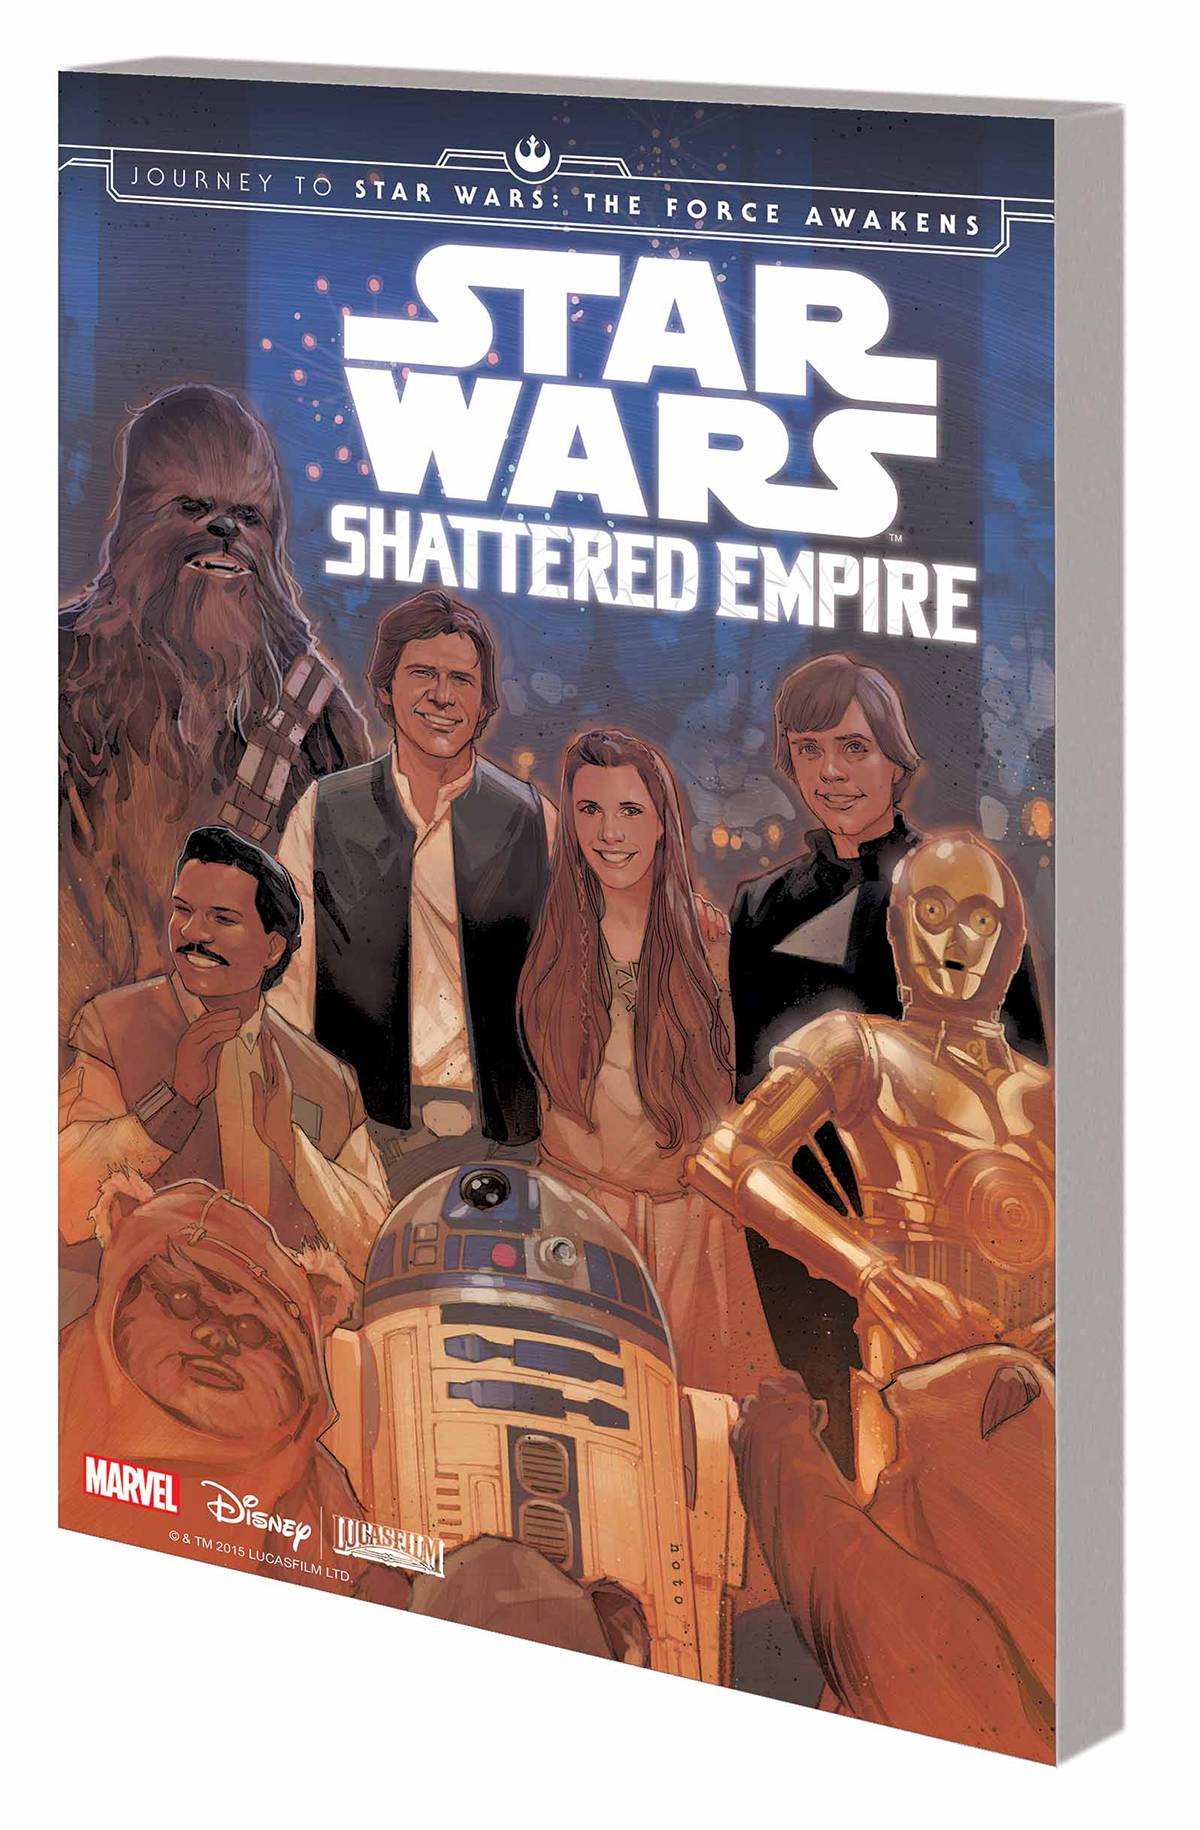 Star Wars Graphic Novel Journey To Star Wars Force Awakens Shattered Empire